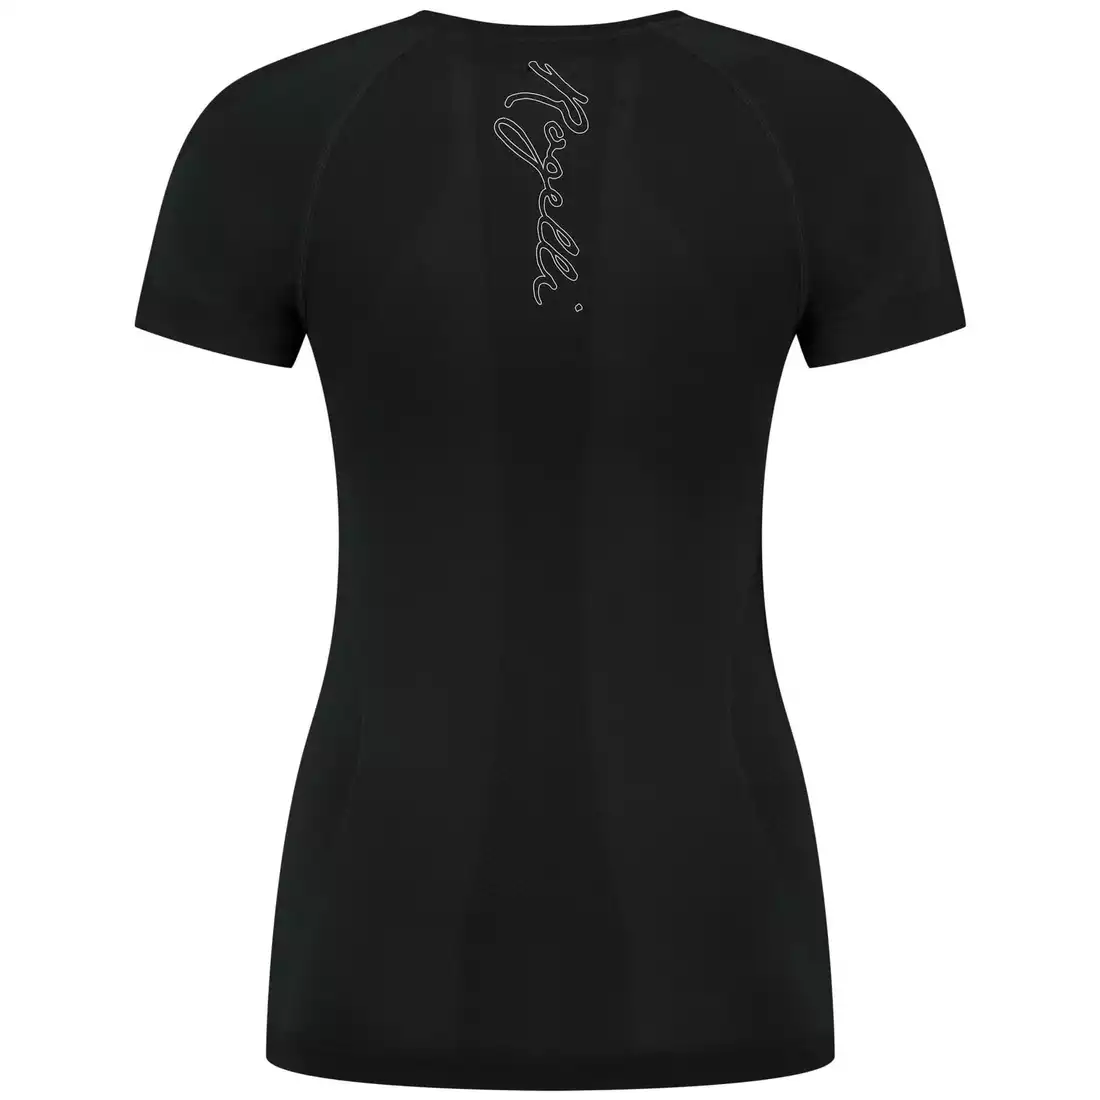 ROGELLI ESSENTIAL Damska koszulka do biegania, czarna